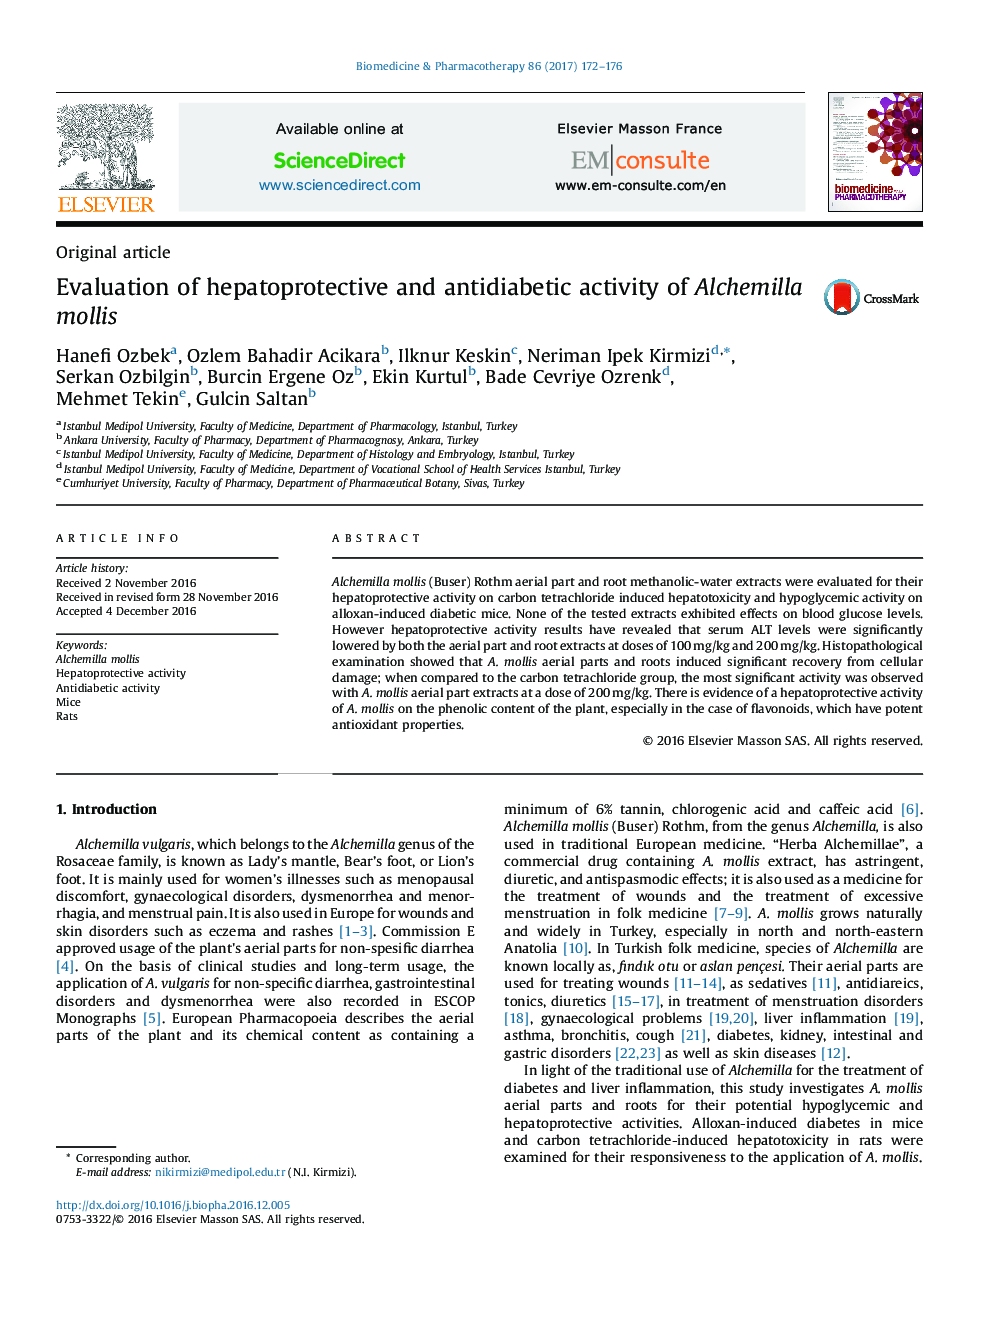 Evaluation of hepatoprotective and antidiabetic activity of Alchemilla mollis